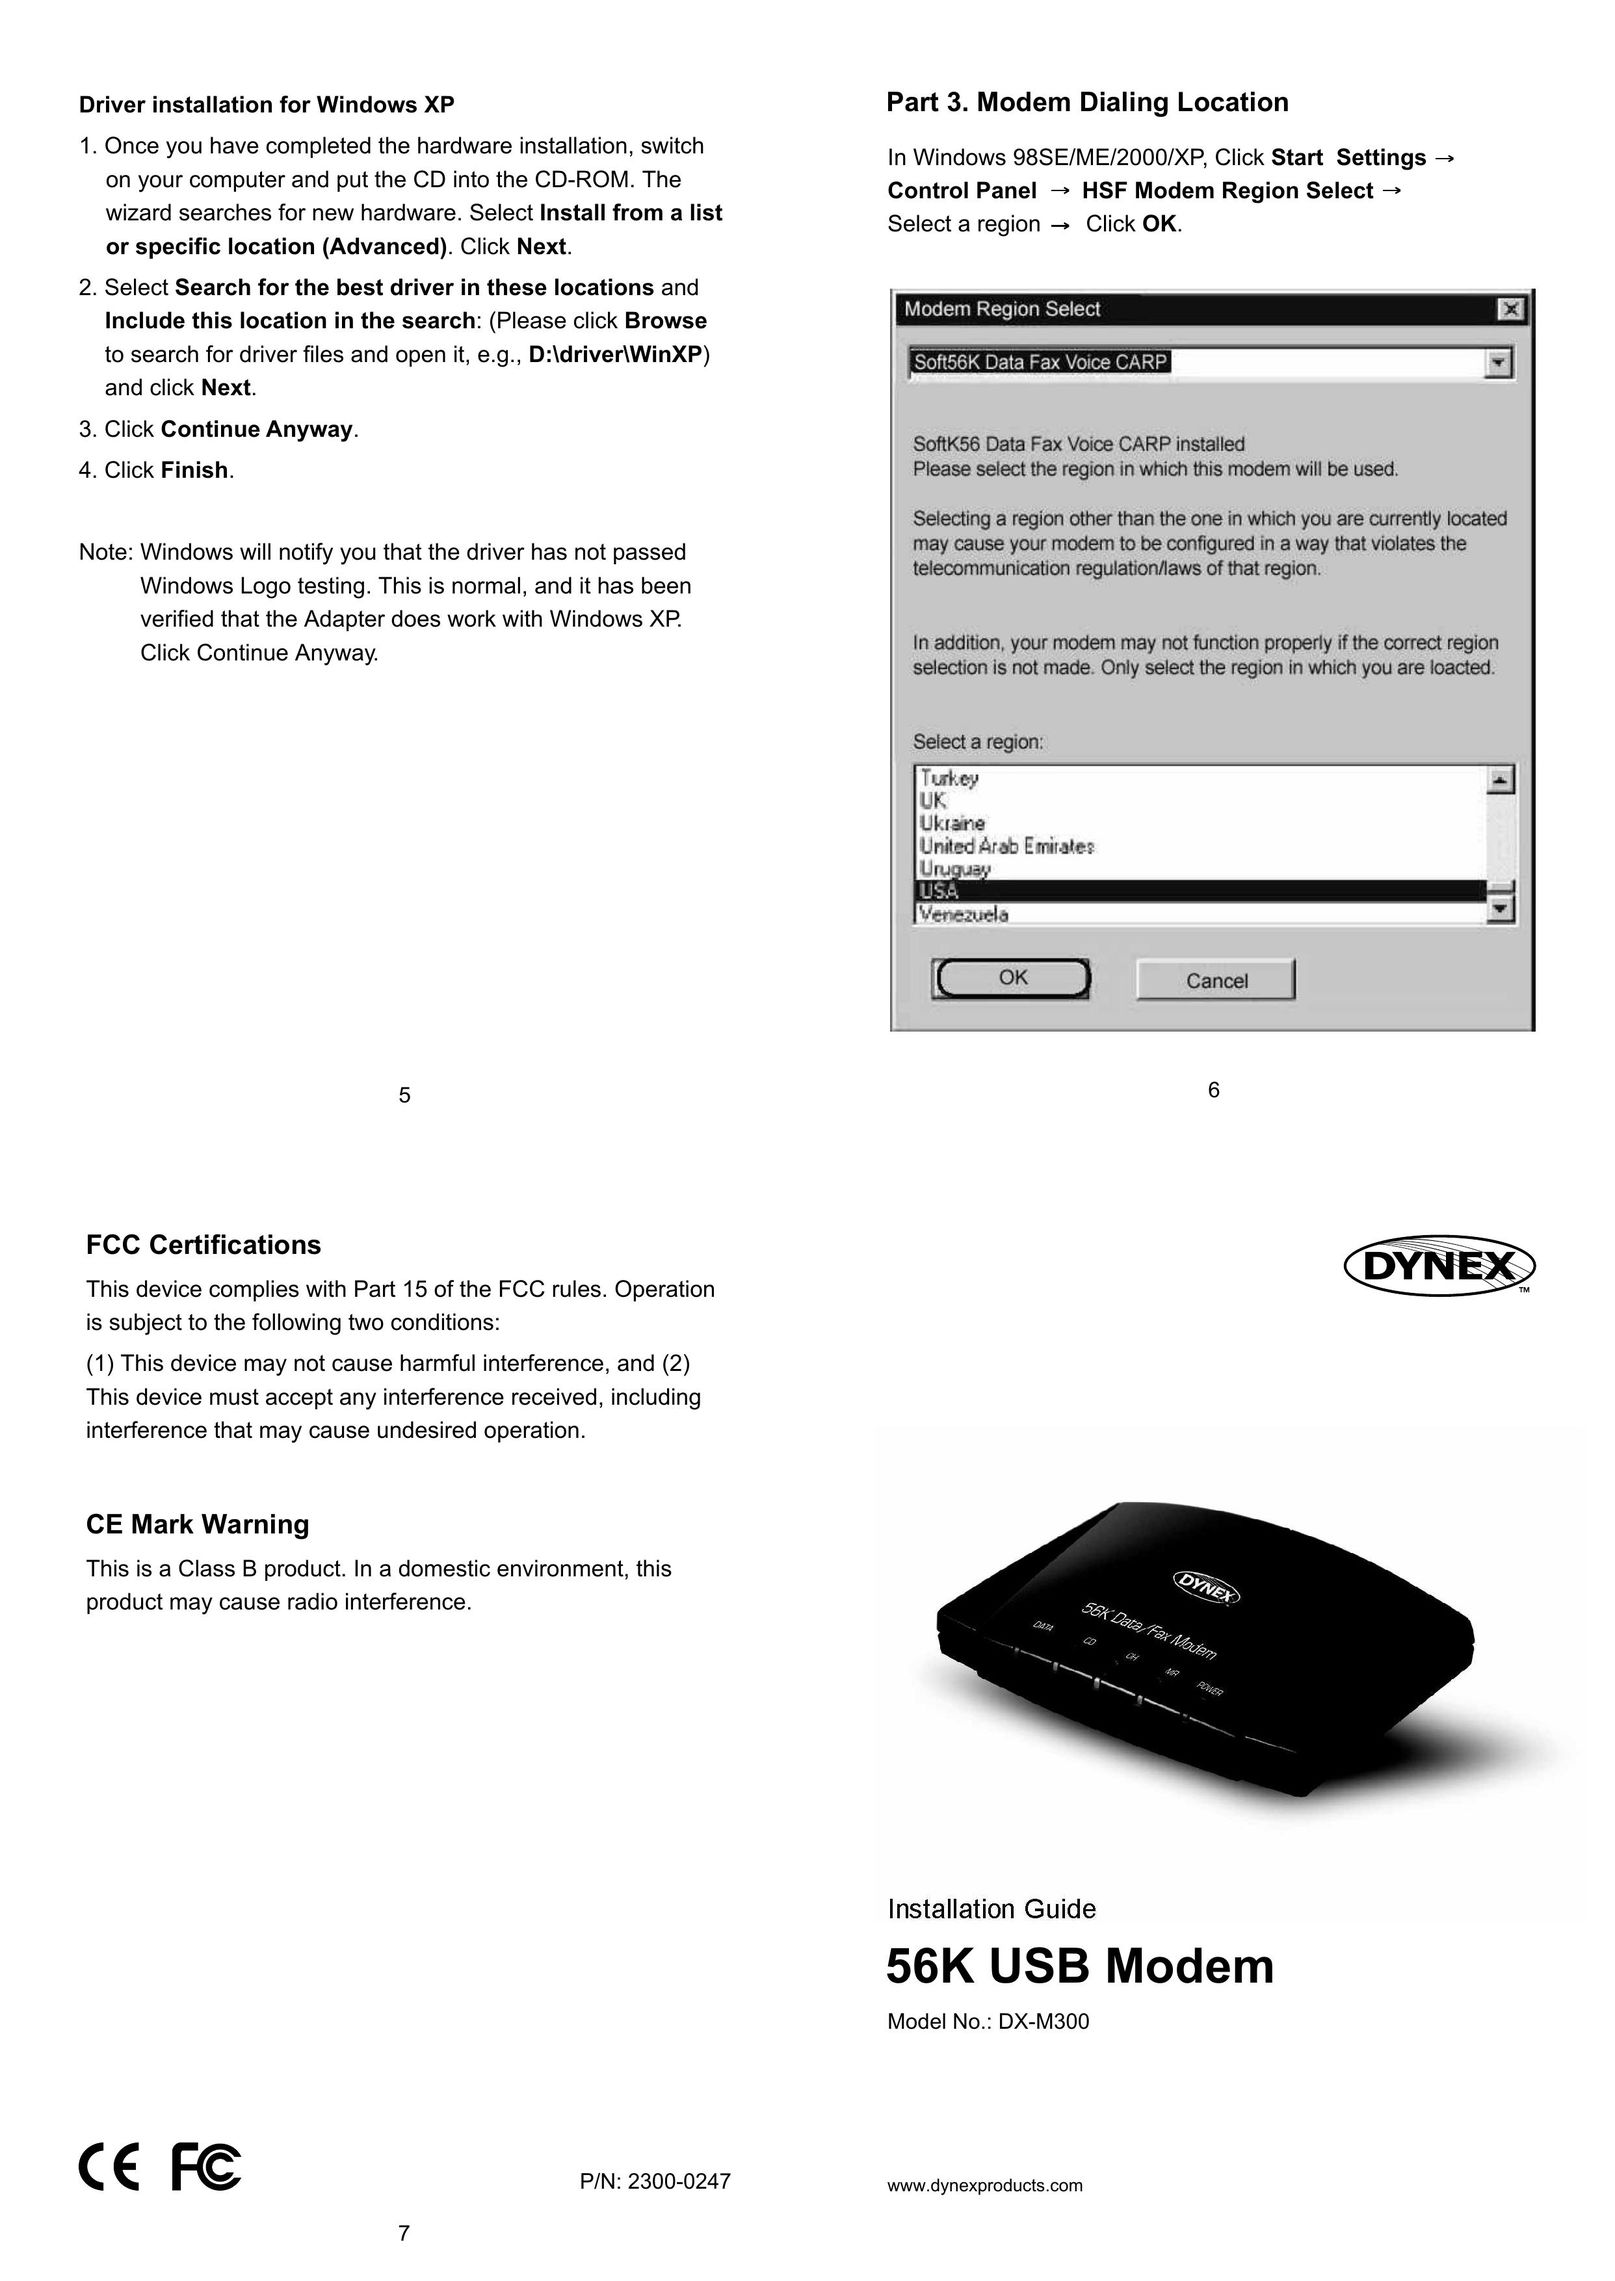 Dynex DX-M300 Modem User Manual